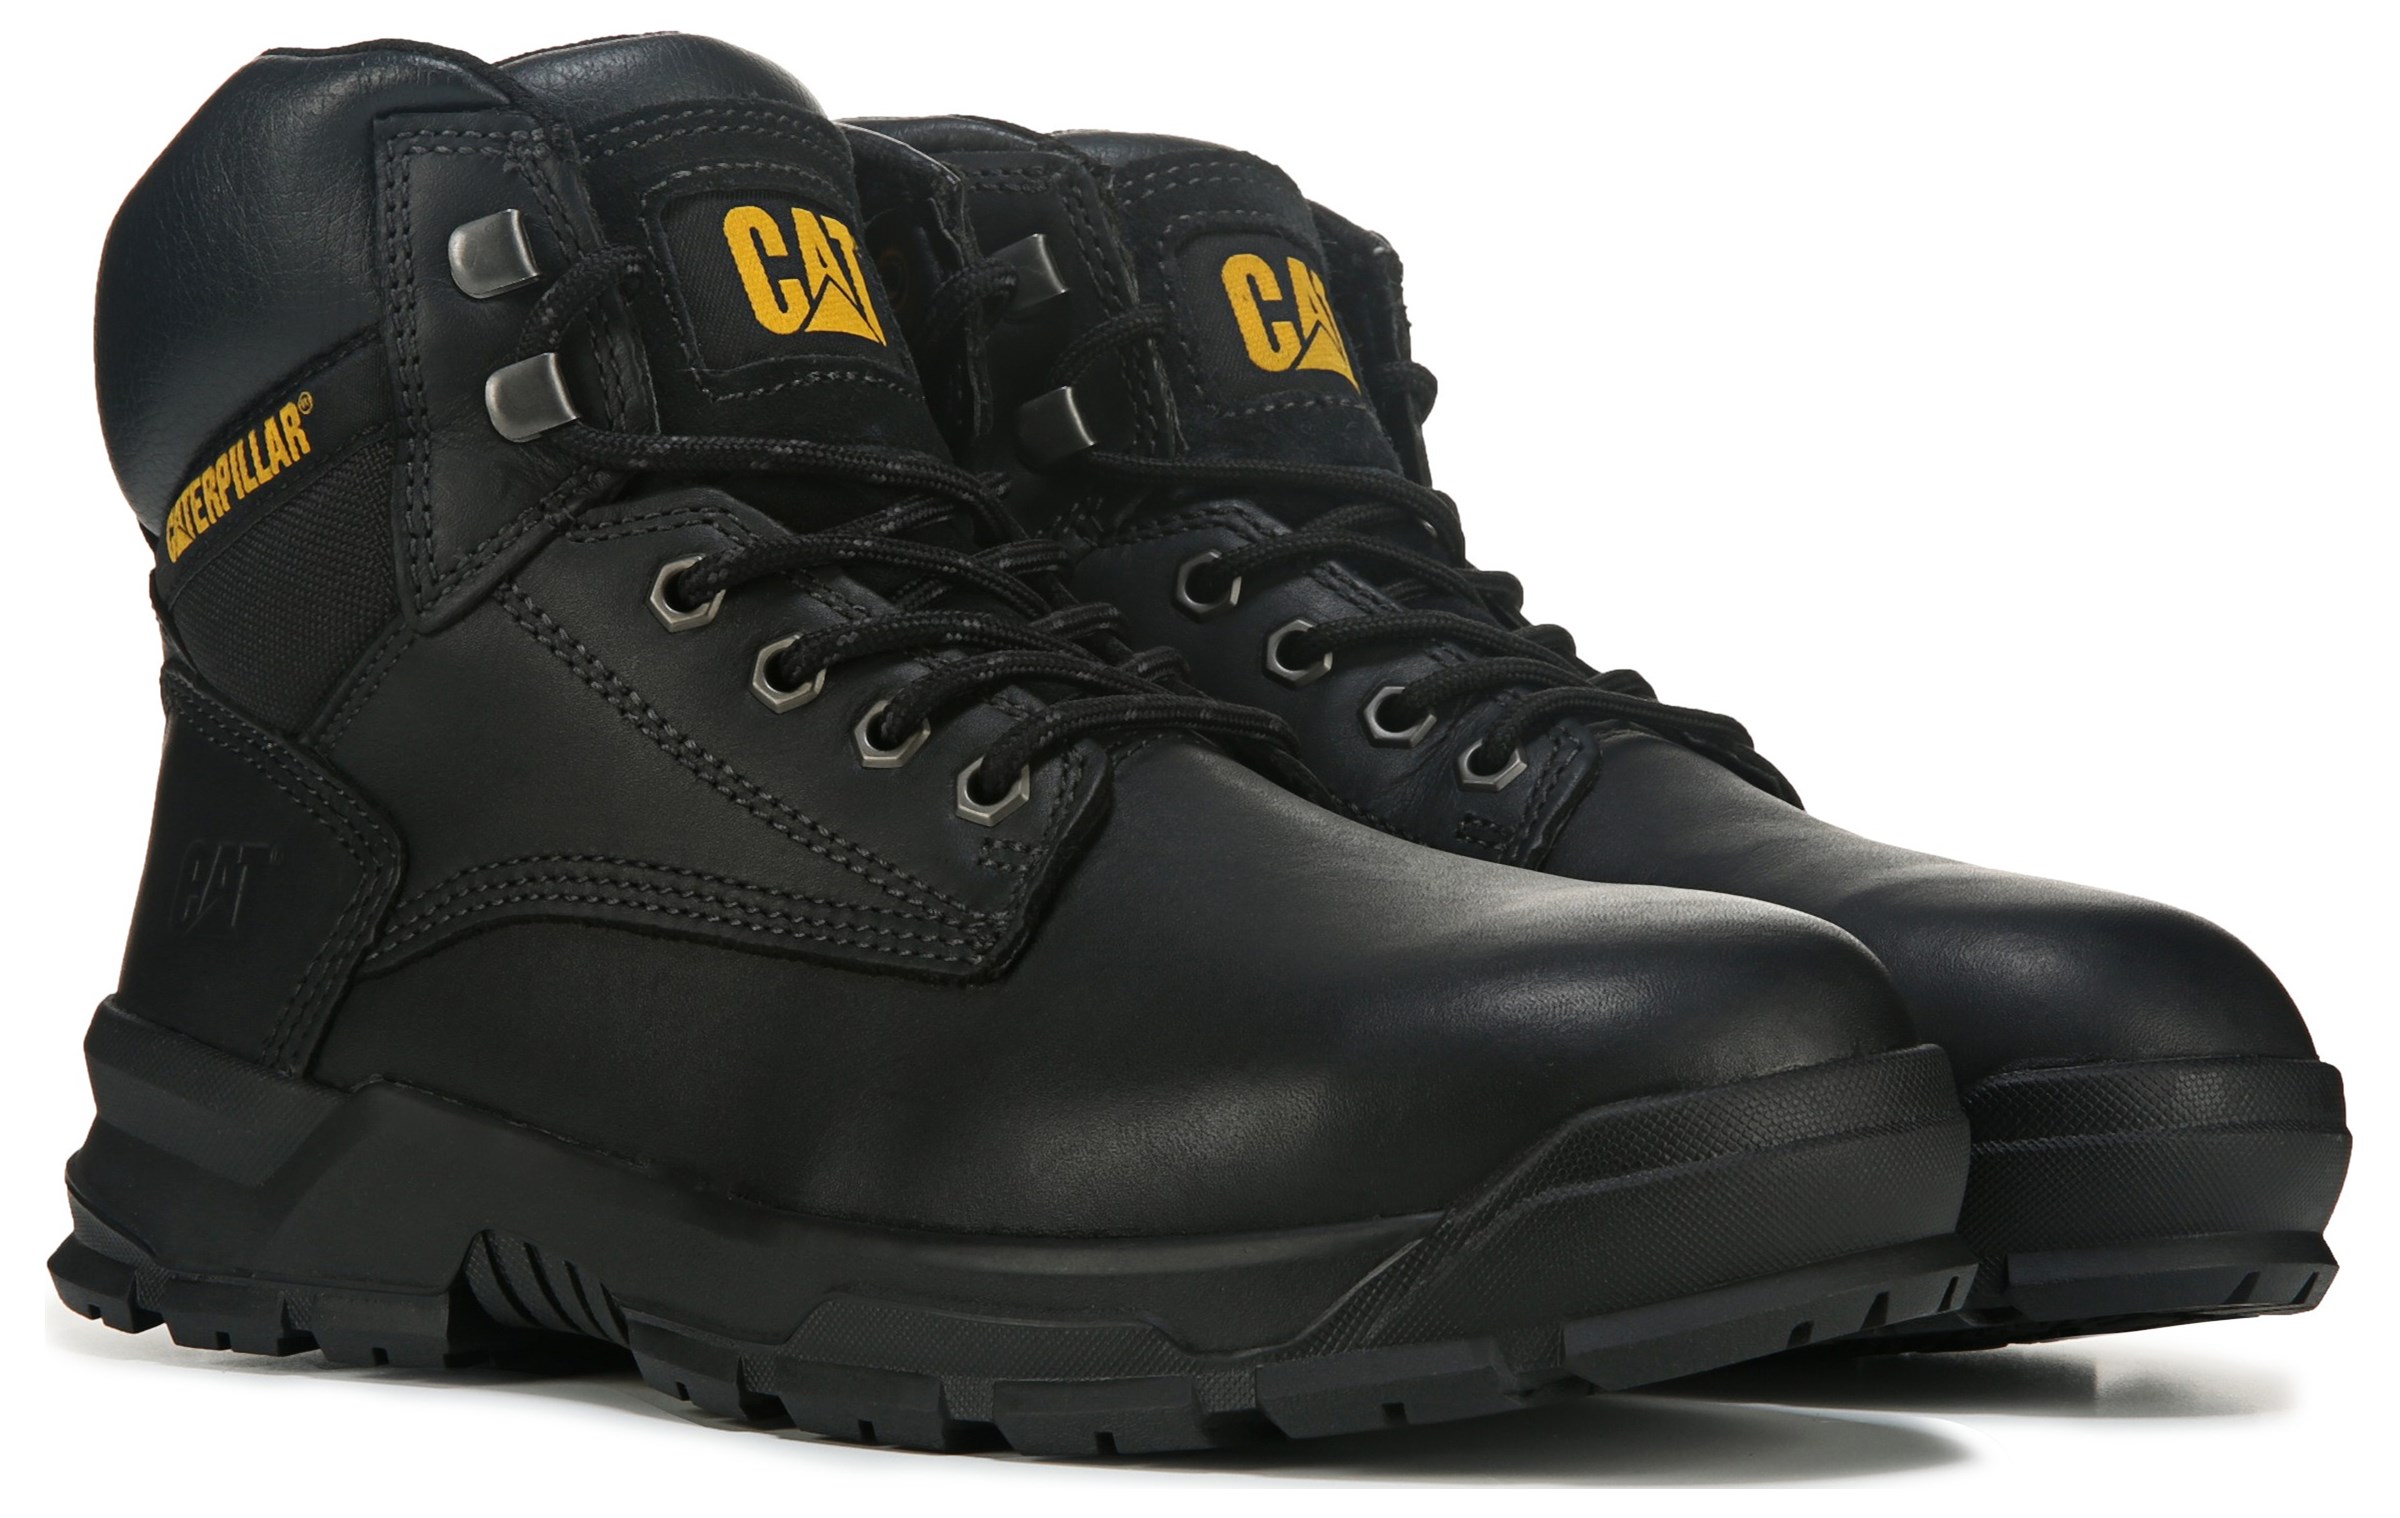 Men's Caterpillar Work Boots Colorado Black Leather Wide 